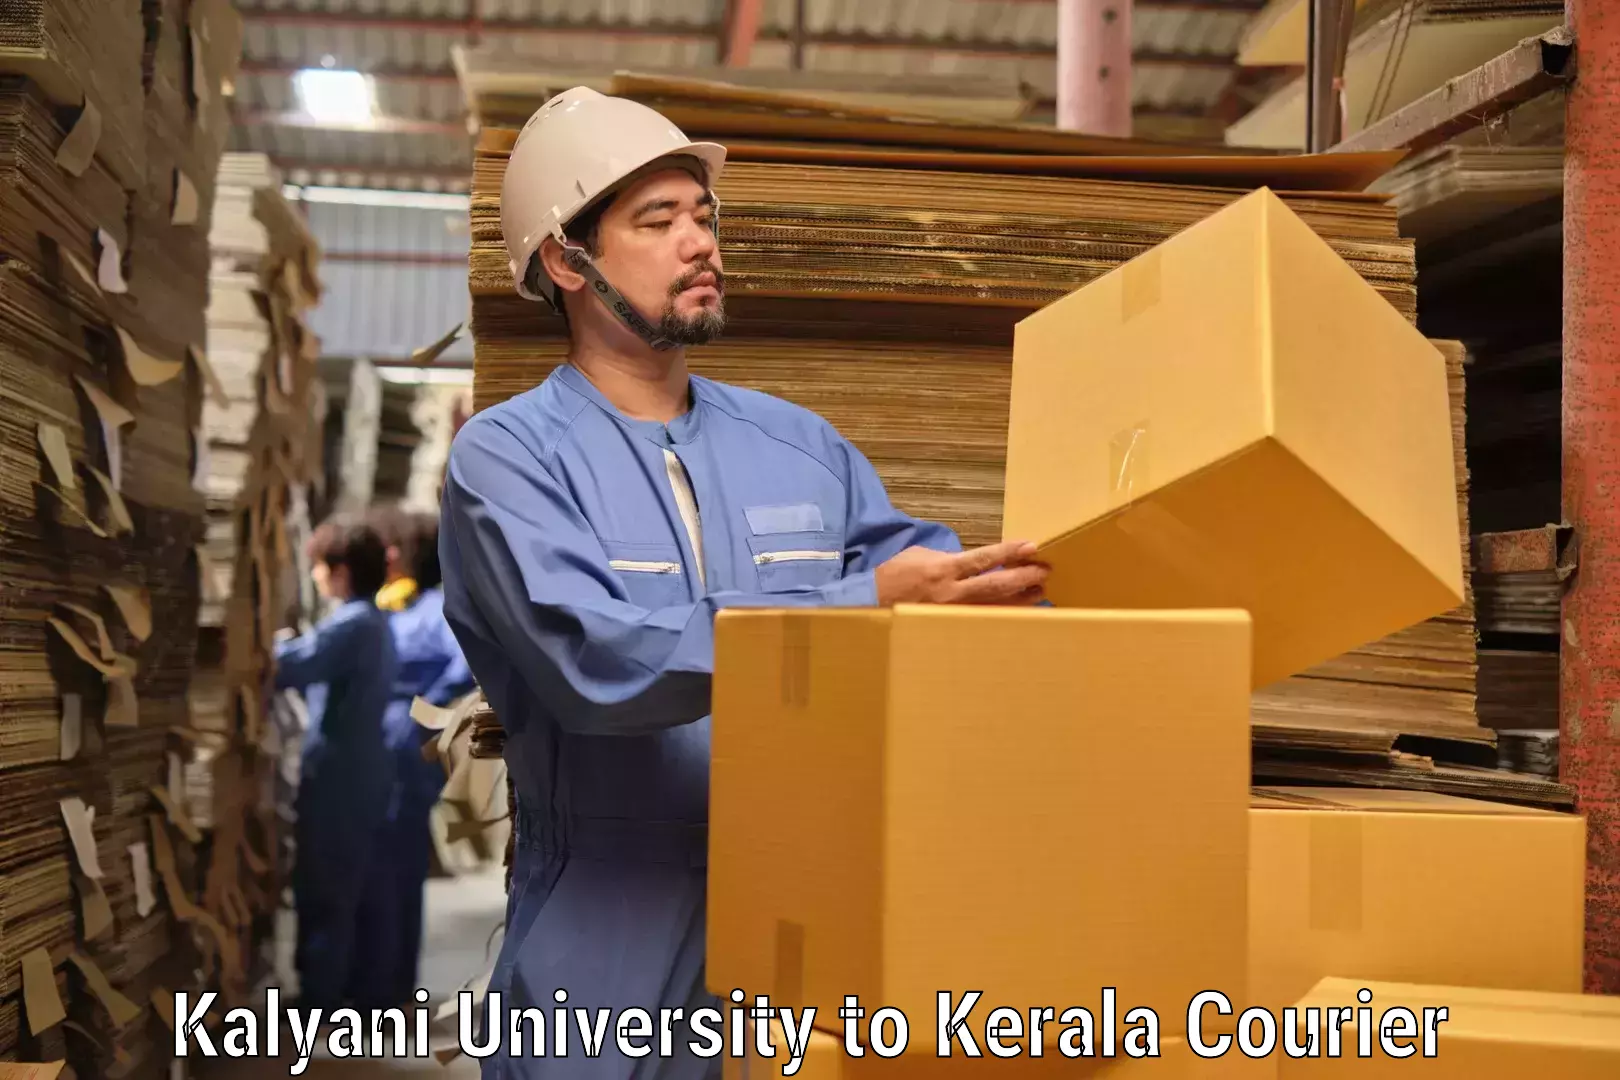 Express delivery capabilities Kalyani University to Kerala